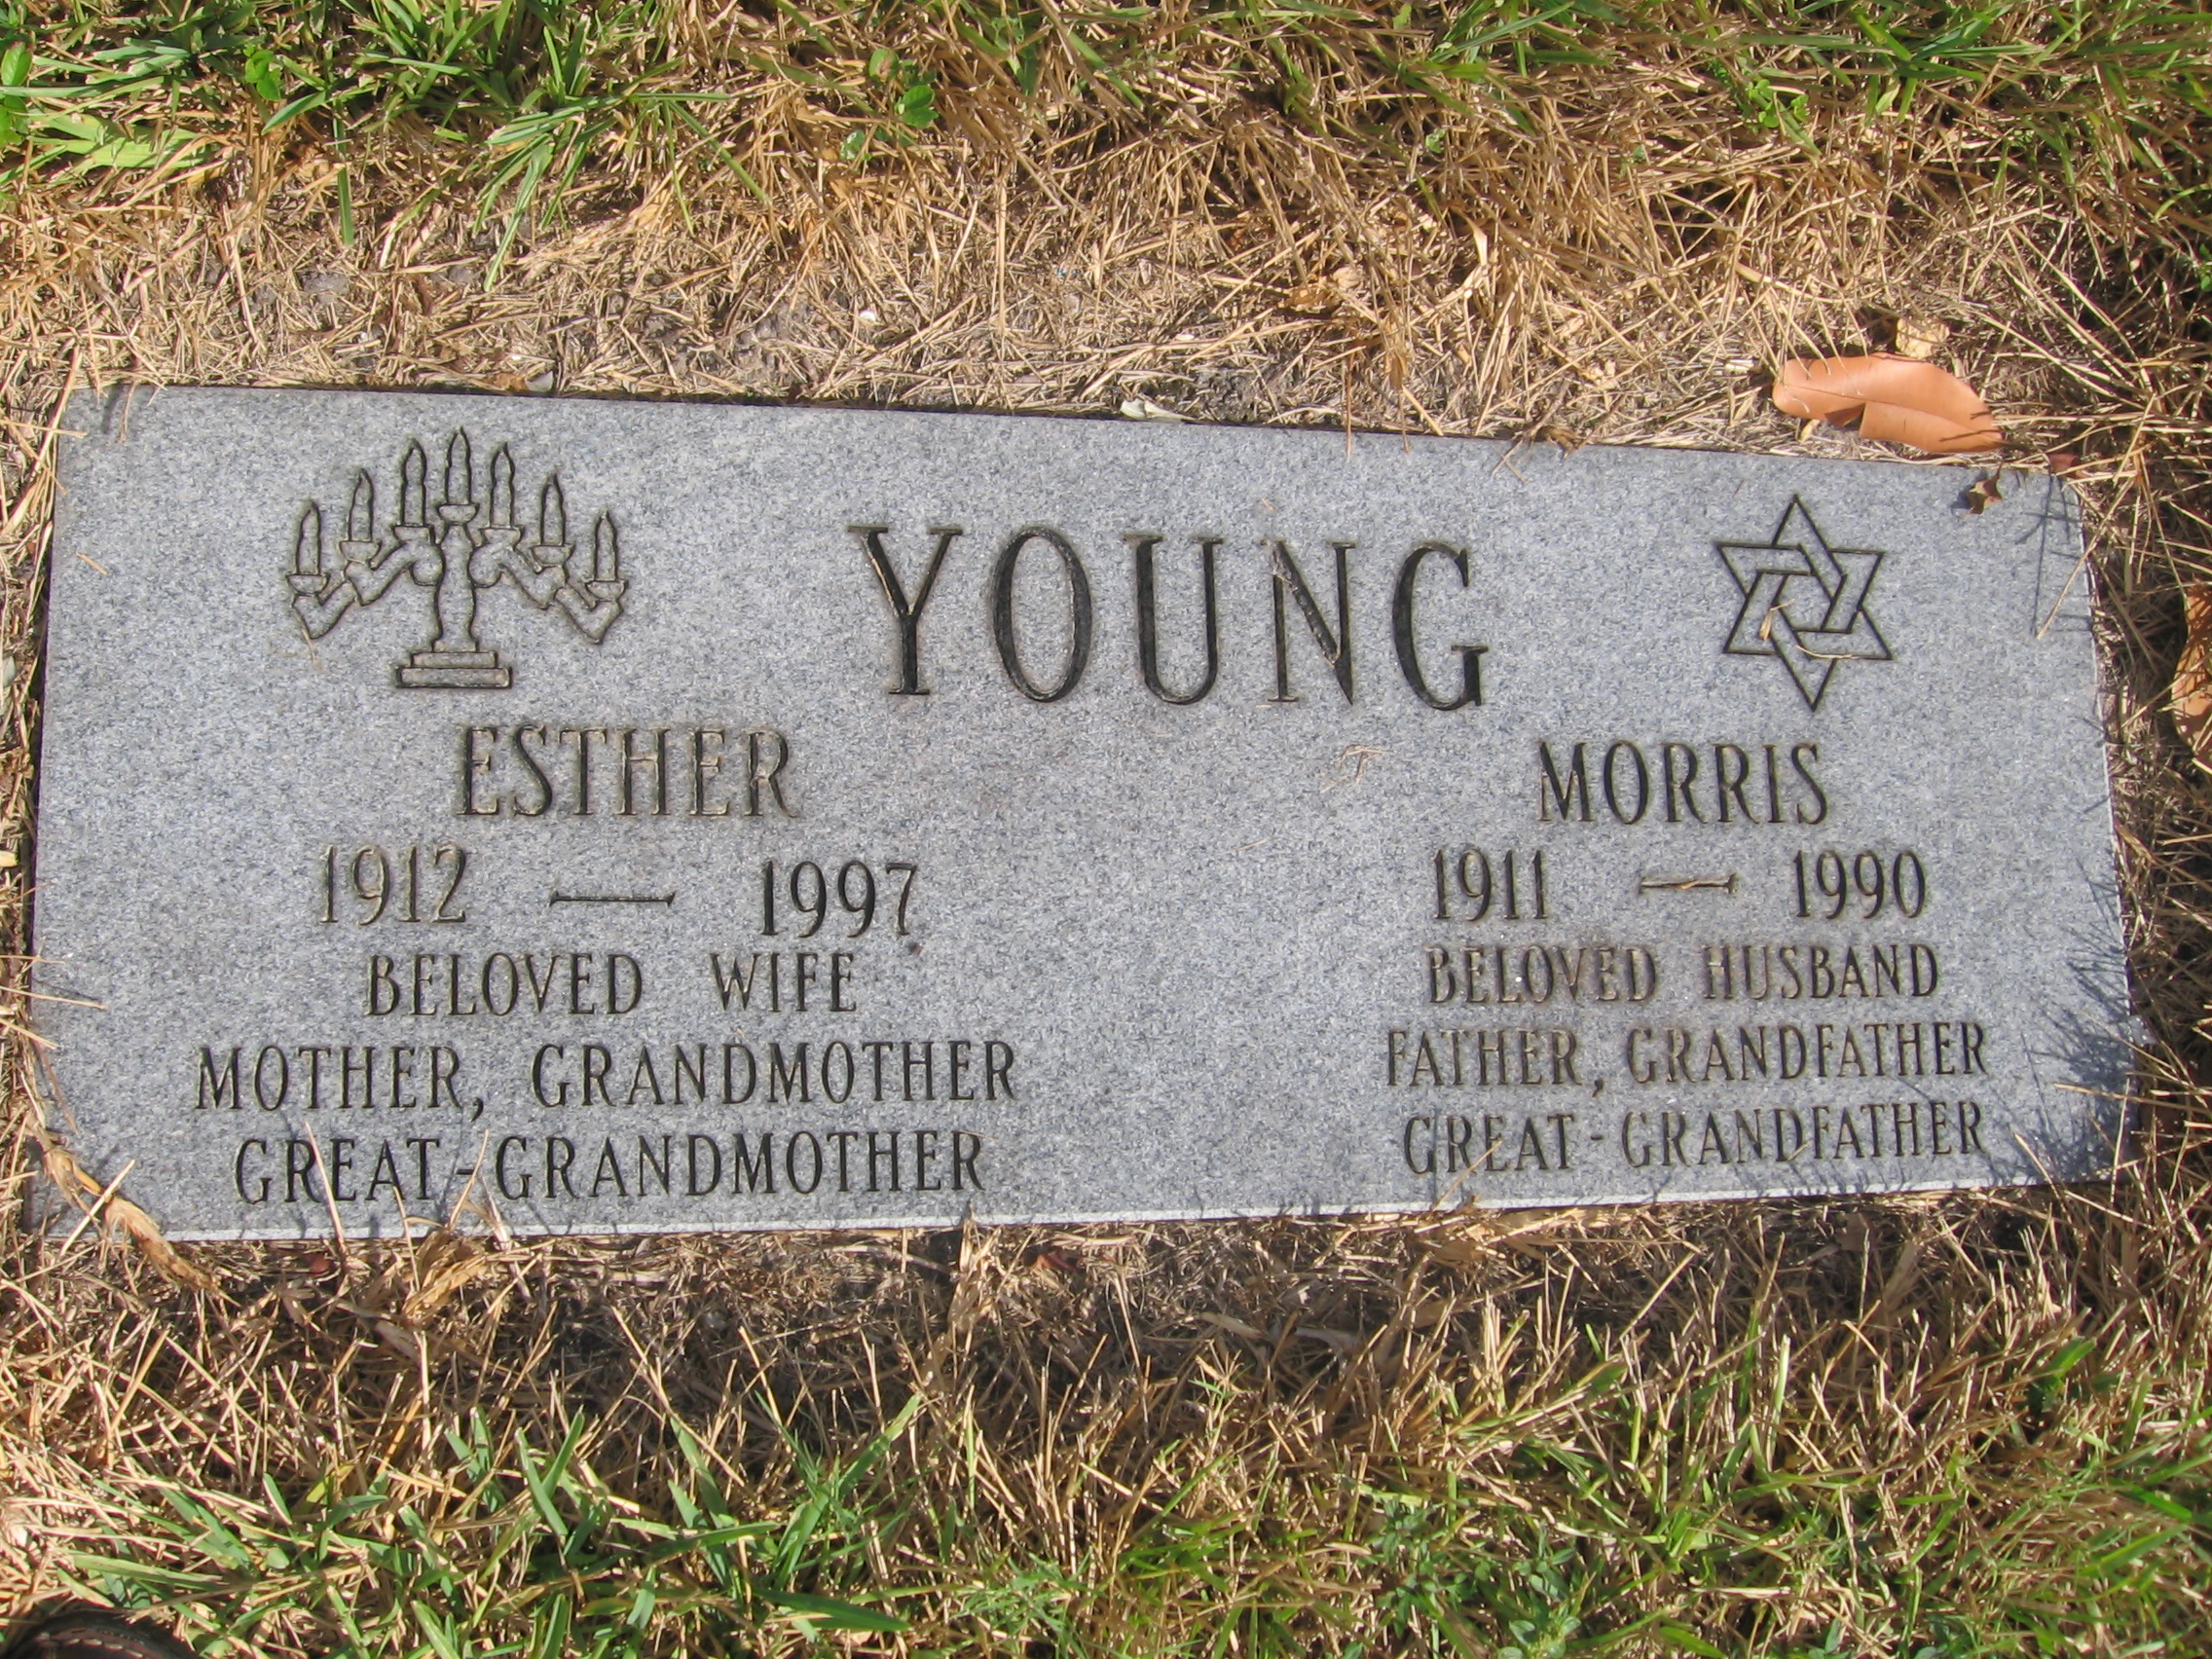 Morris Young